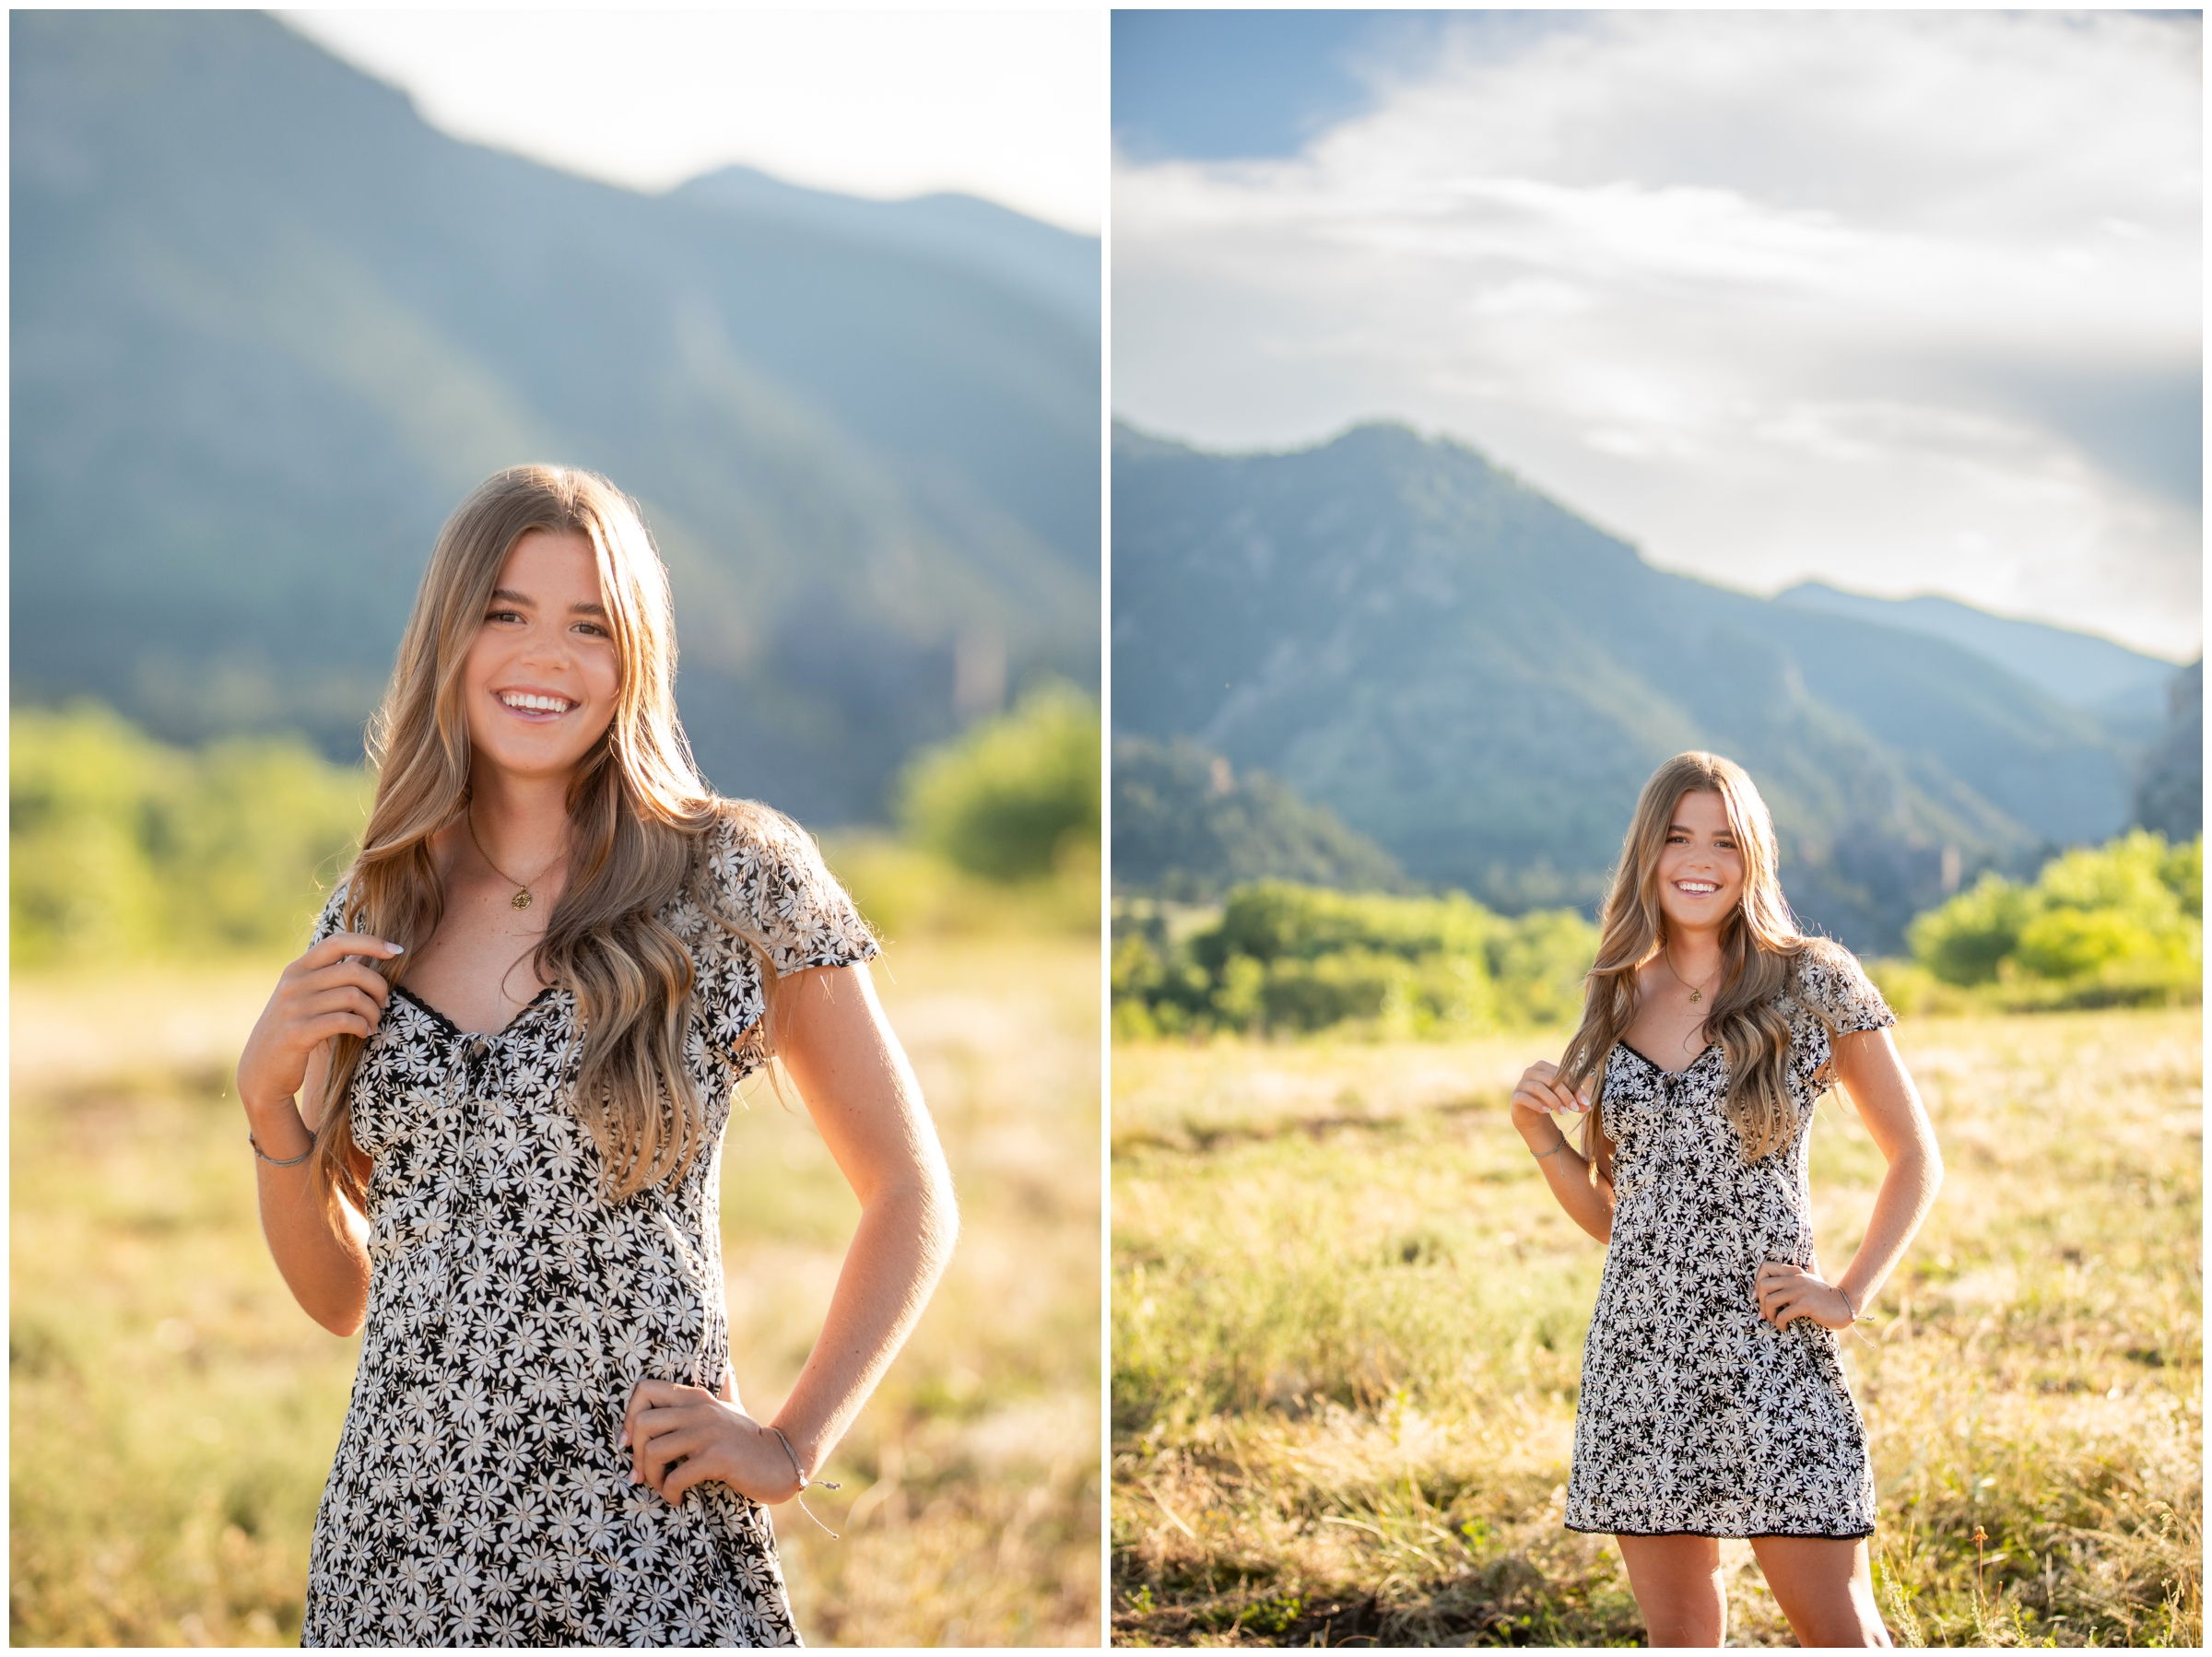 South Mesa graduation photography session in Boulder Colorado 